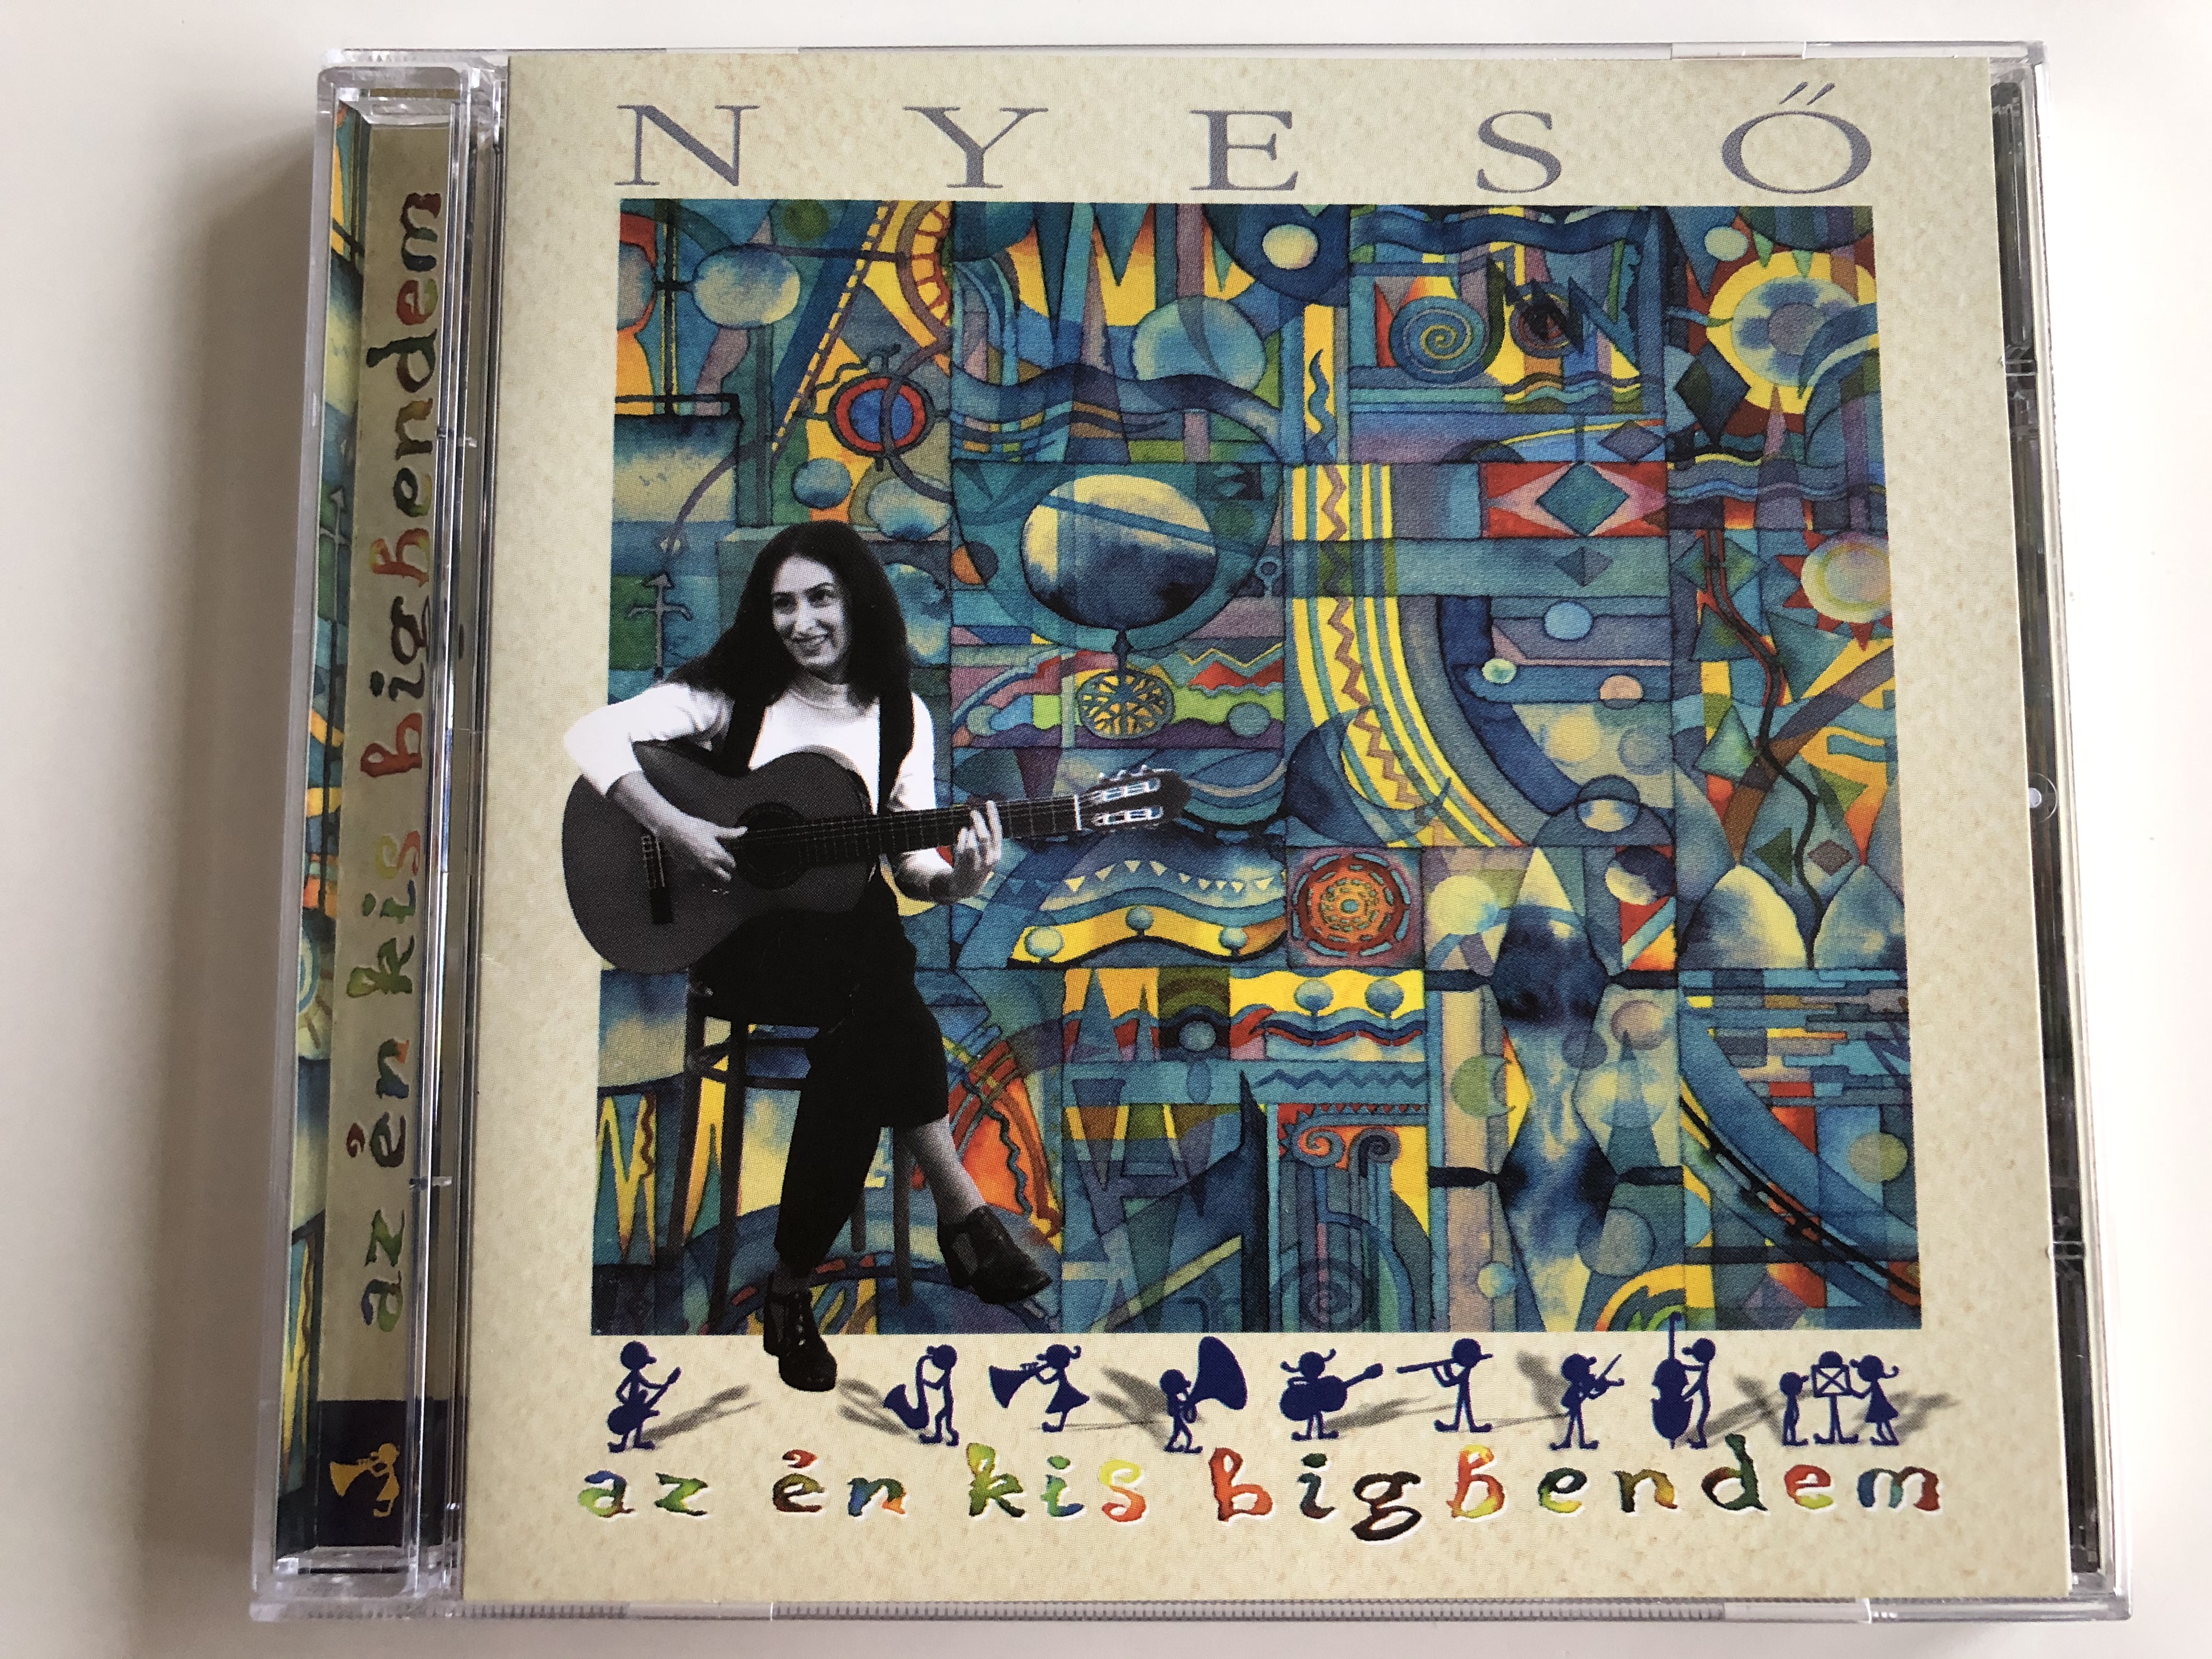 nyes-az-n-kis-bigbendem-gryllus-audio-cd-2000-gcd-019-1-.jpg